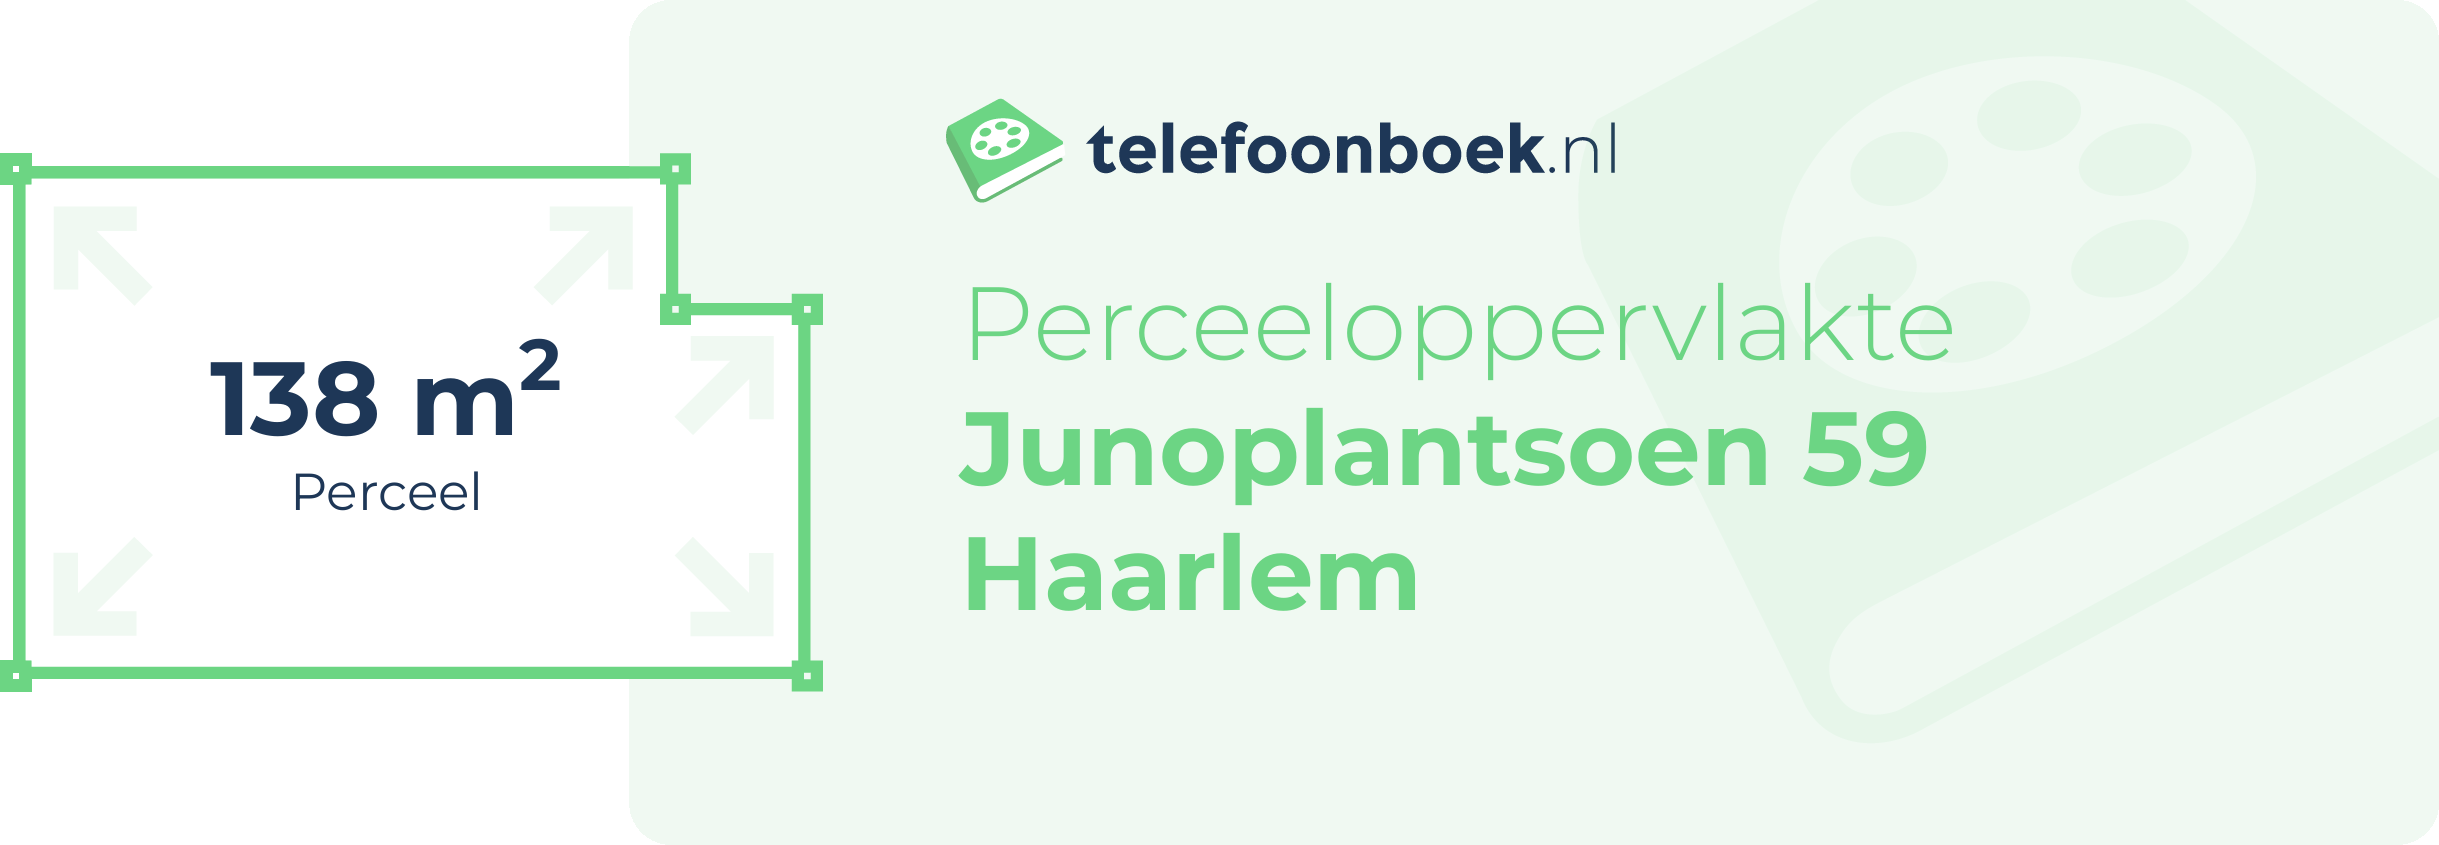 Perceeloppervlakte Junoplantsoen 59 Haarlem